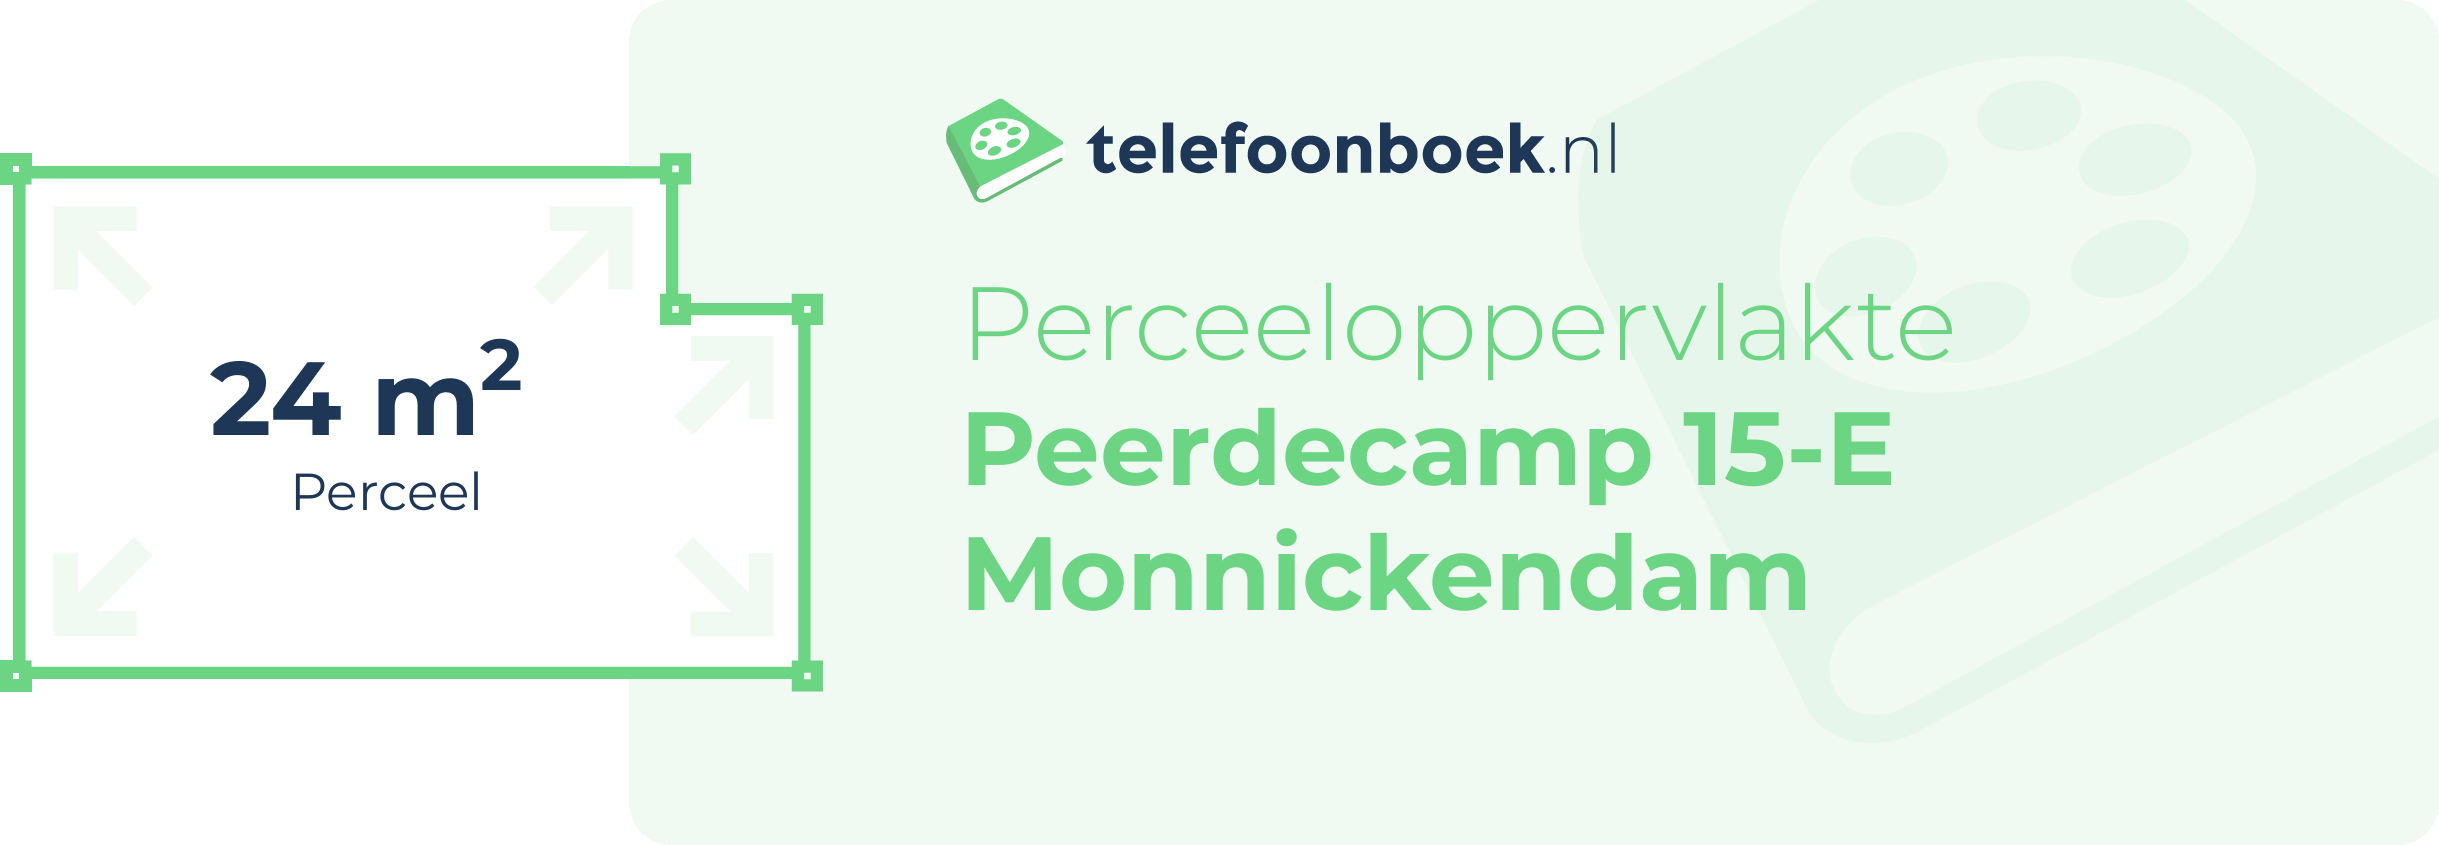 Perceeloppervlakte Peerdecamp 15-E Monnickendam